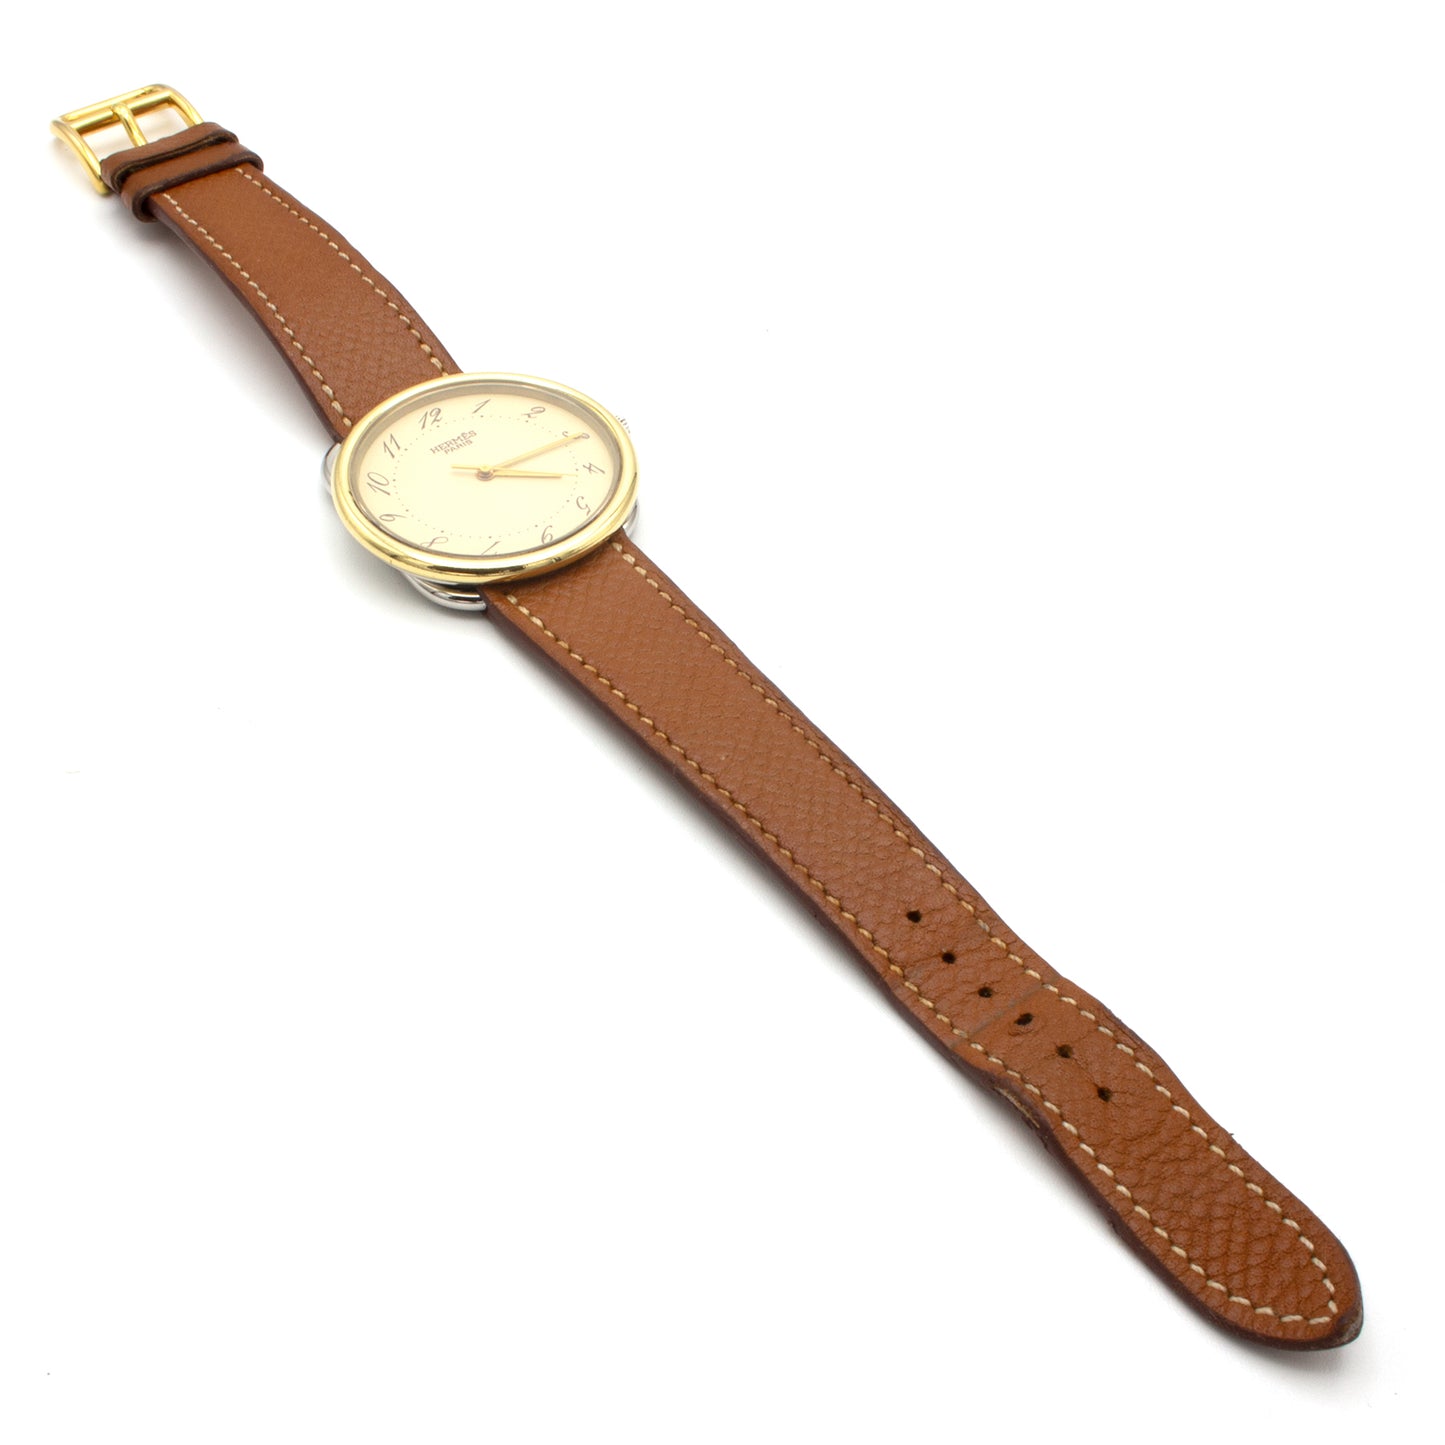 Hermès Arceau 34mm watch